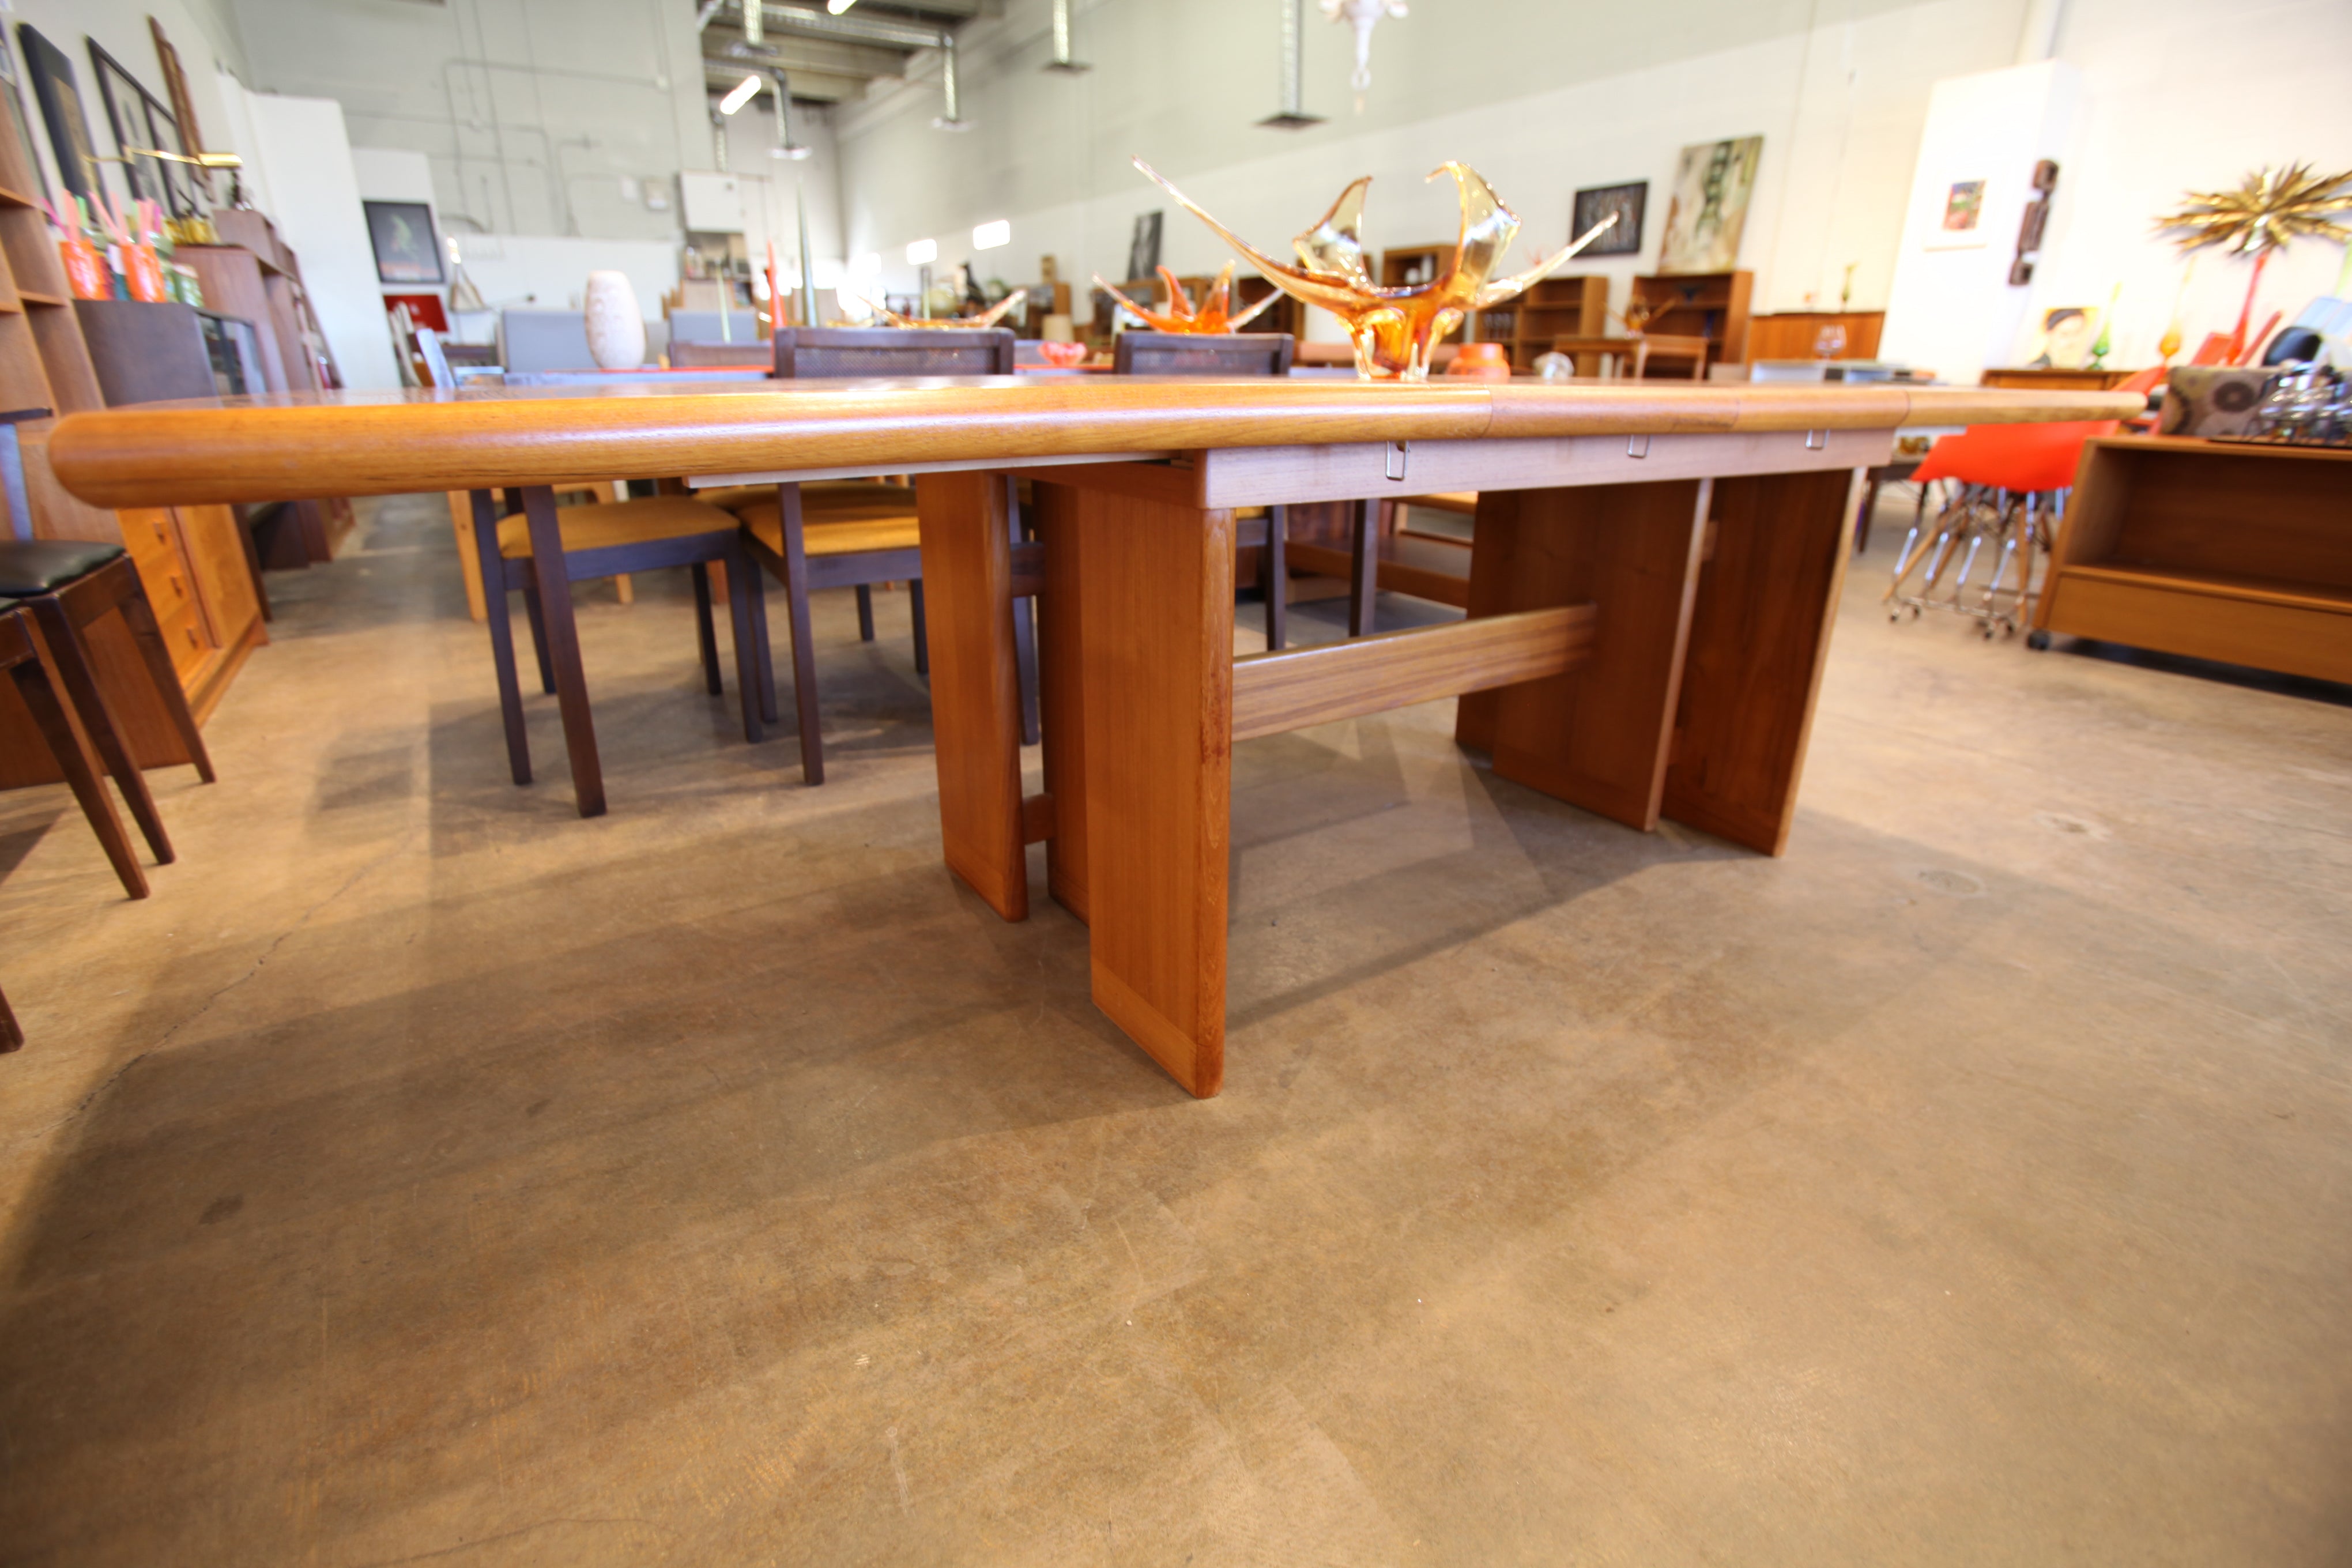 Large Vintage Teak Dining Table w/ 2 Leafs and Unique Base Design